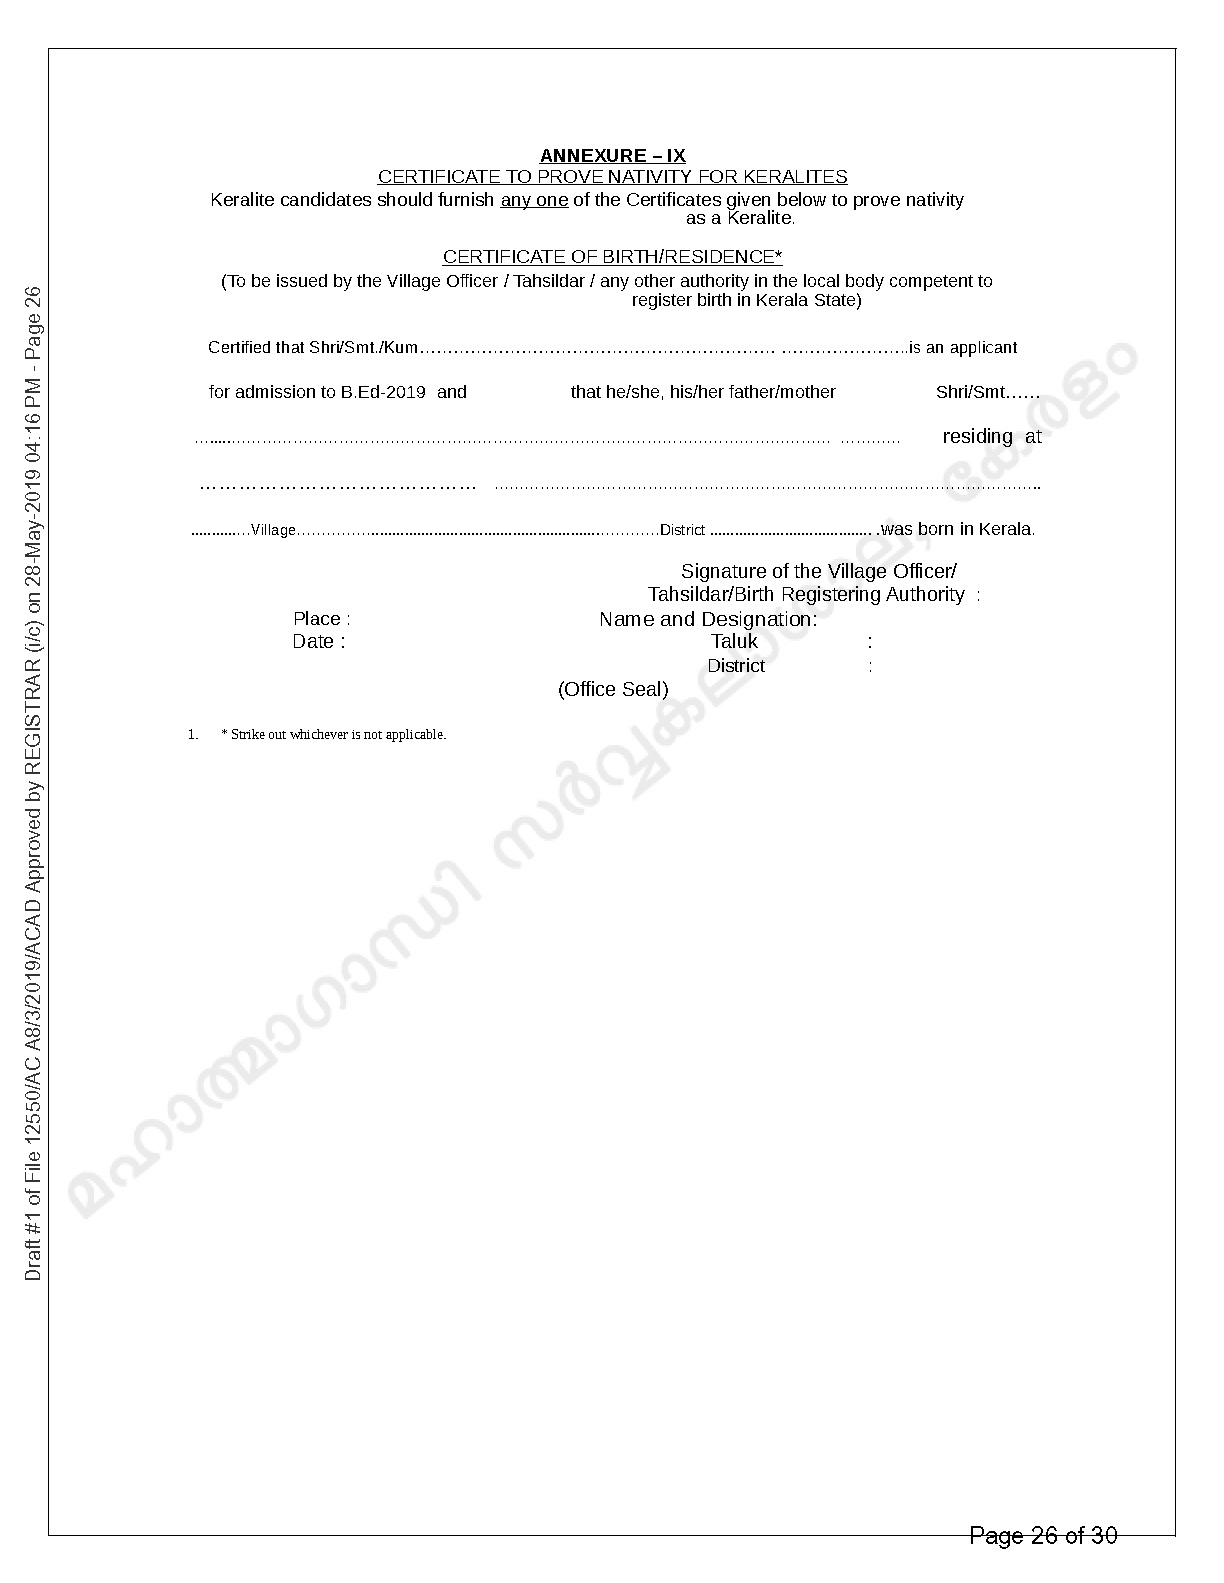 MG University B Ed Prospectus and Application form 2019 2020 - Notification Image 18